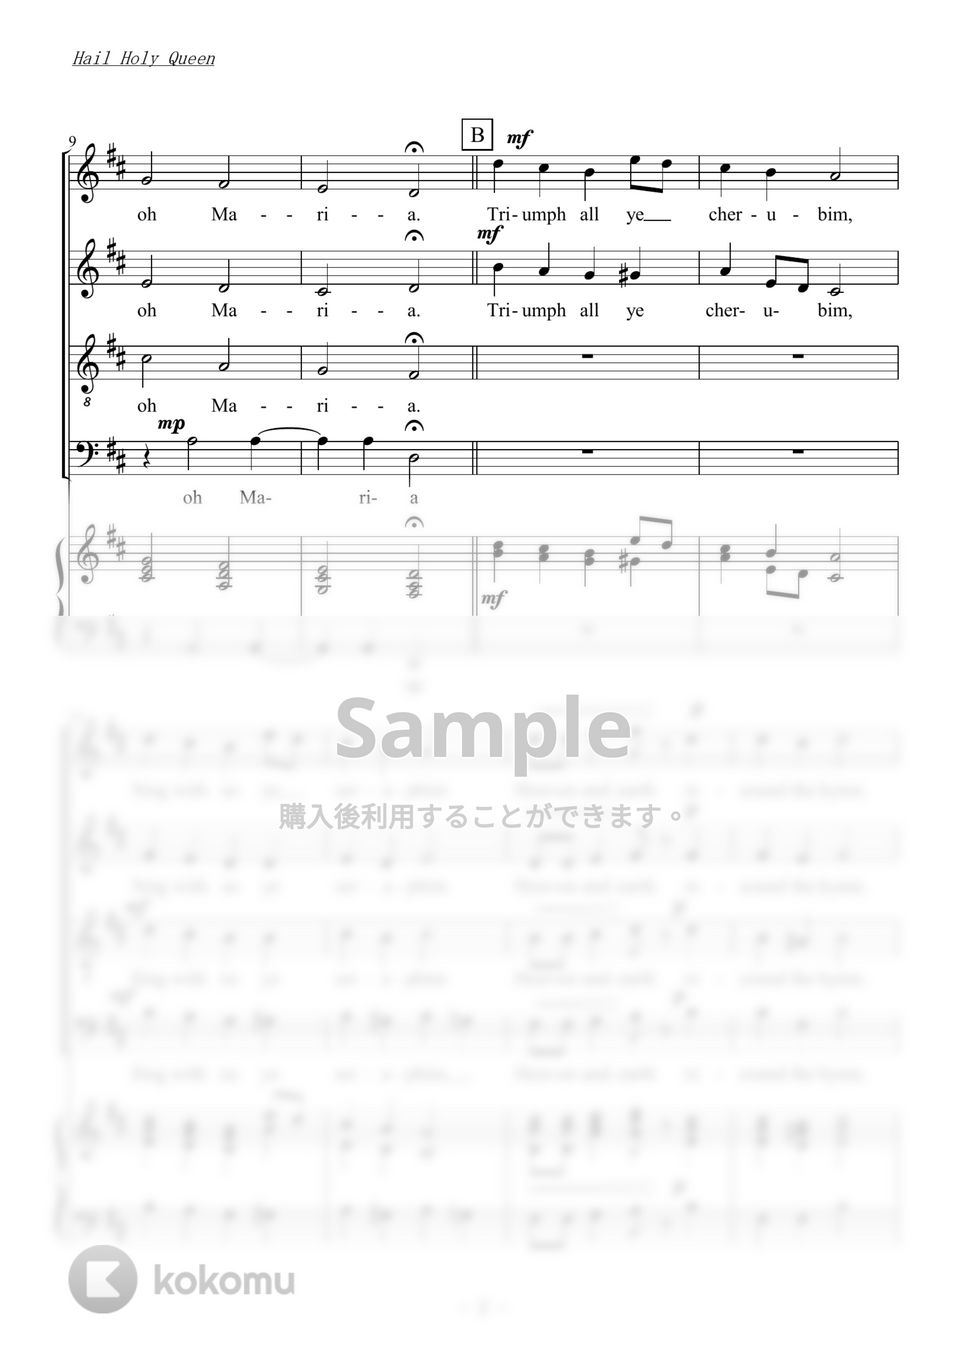 M.シャイマン - Hail Holy Queen (混声四部合唱) by kiminabe